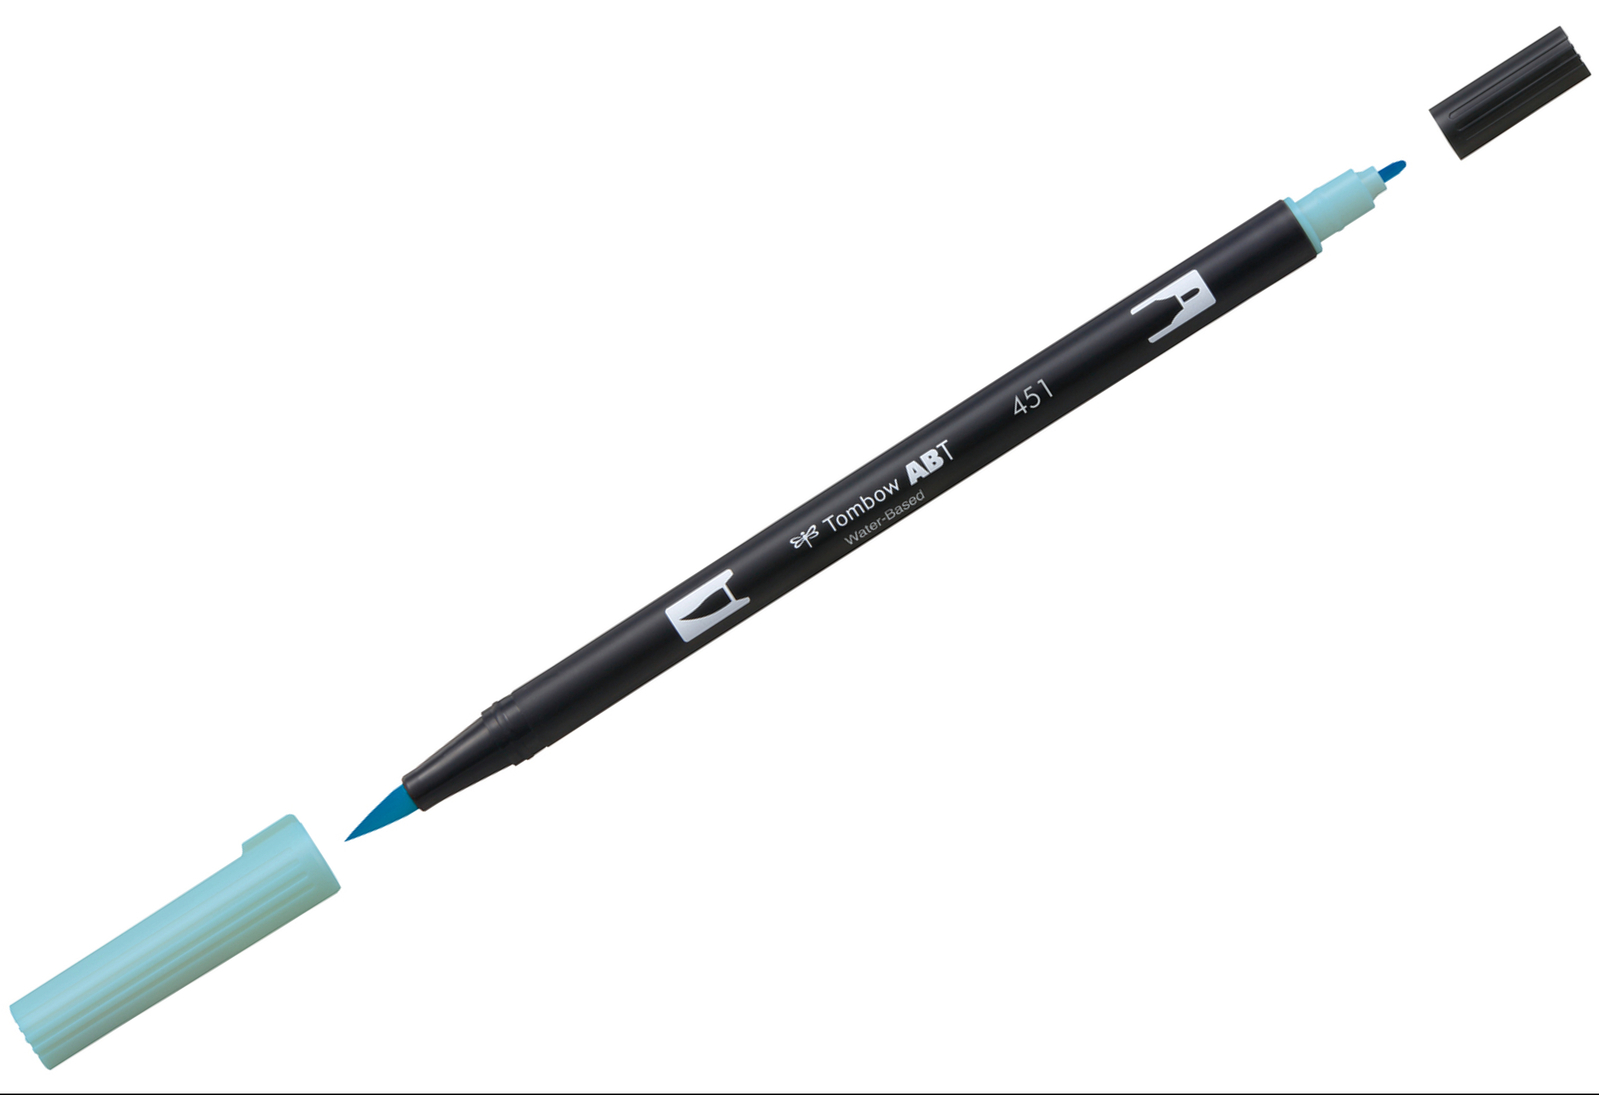 Tombow Dual Brush Pen - Sky Blue - 451